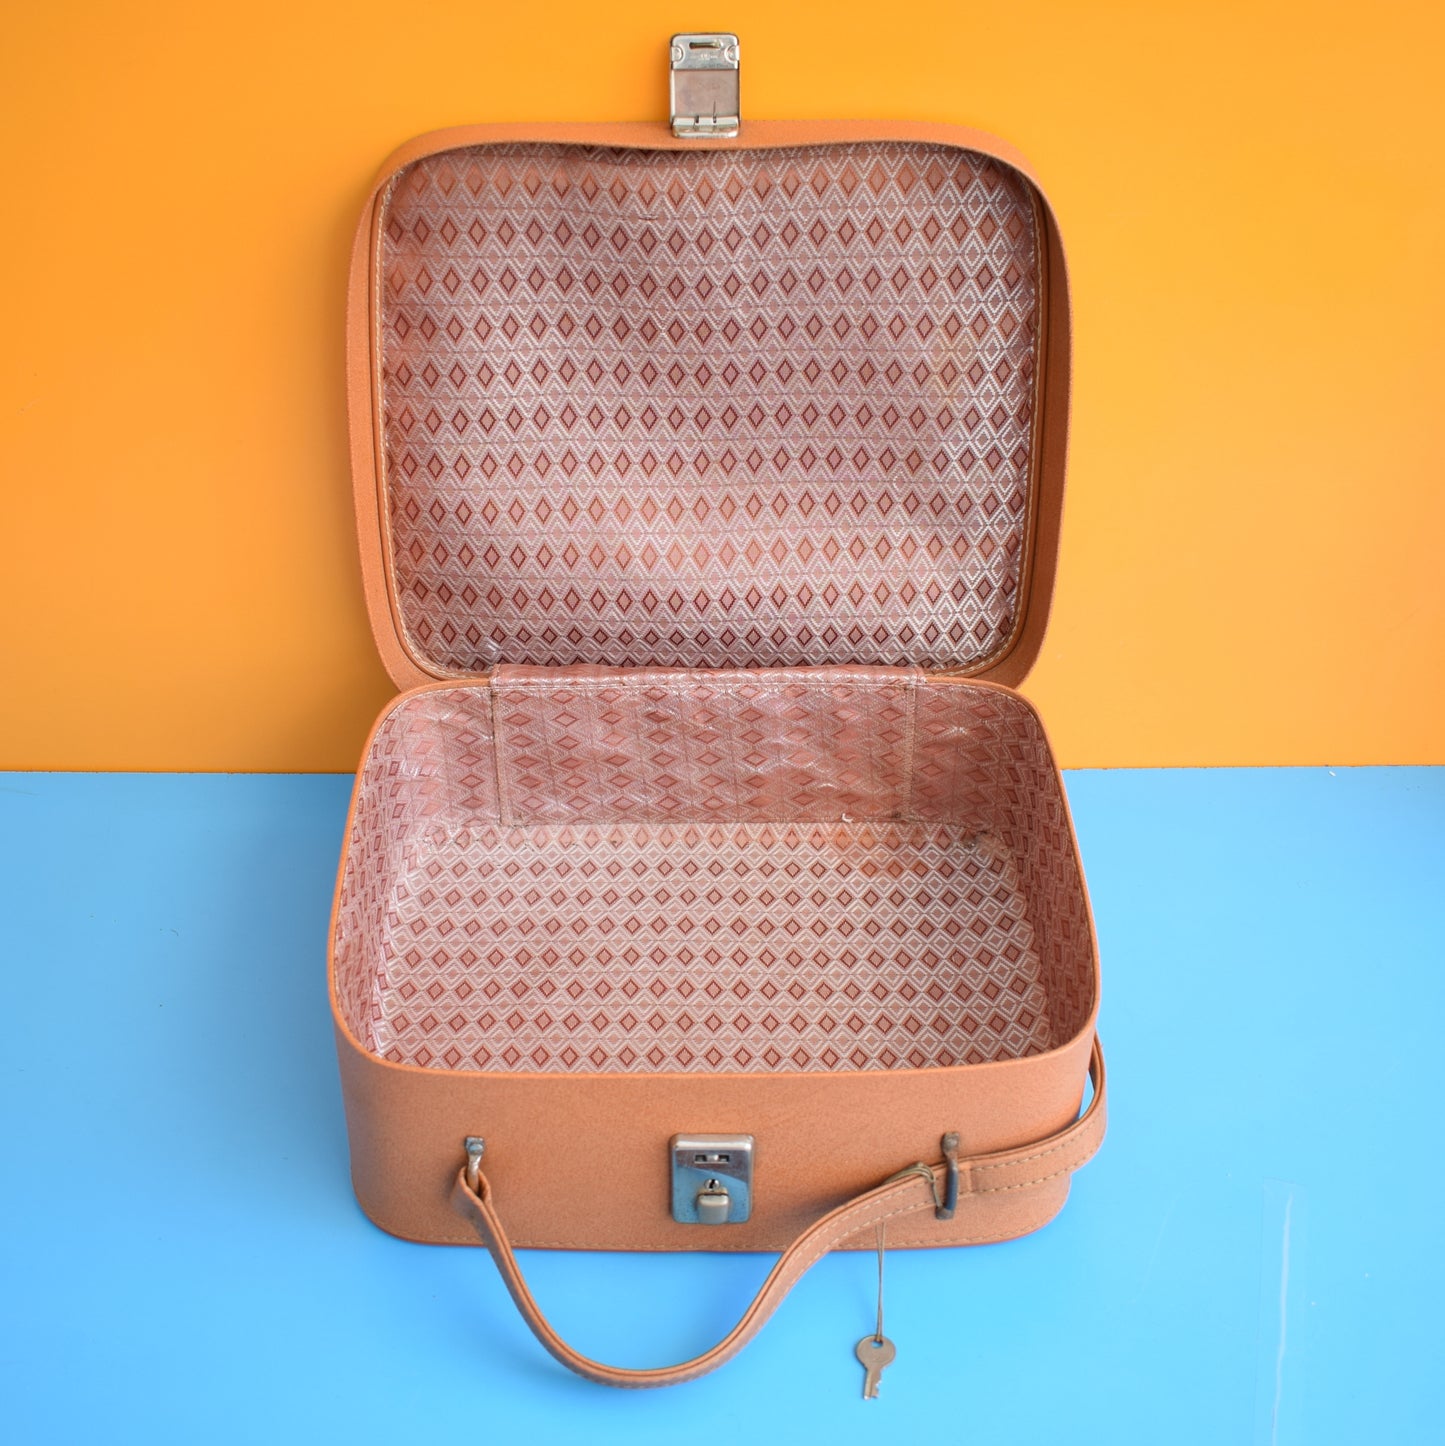 Vintage 1960s Suitcases - Tan